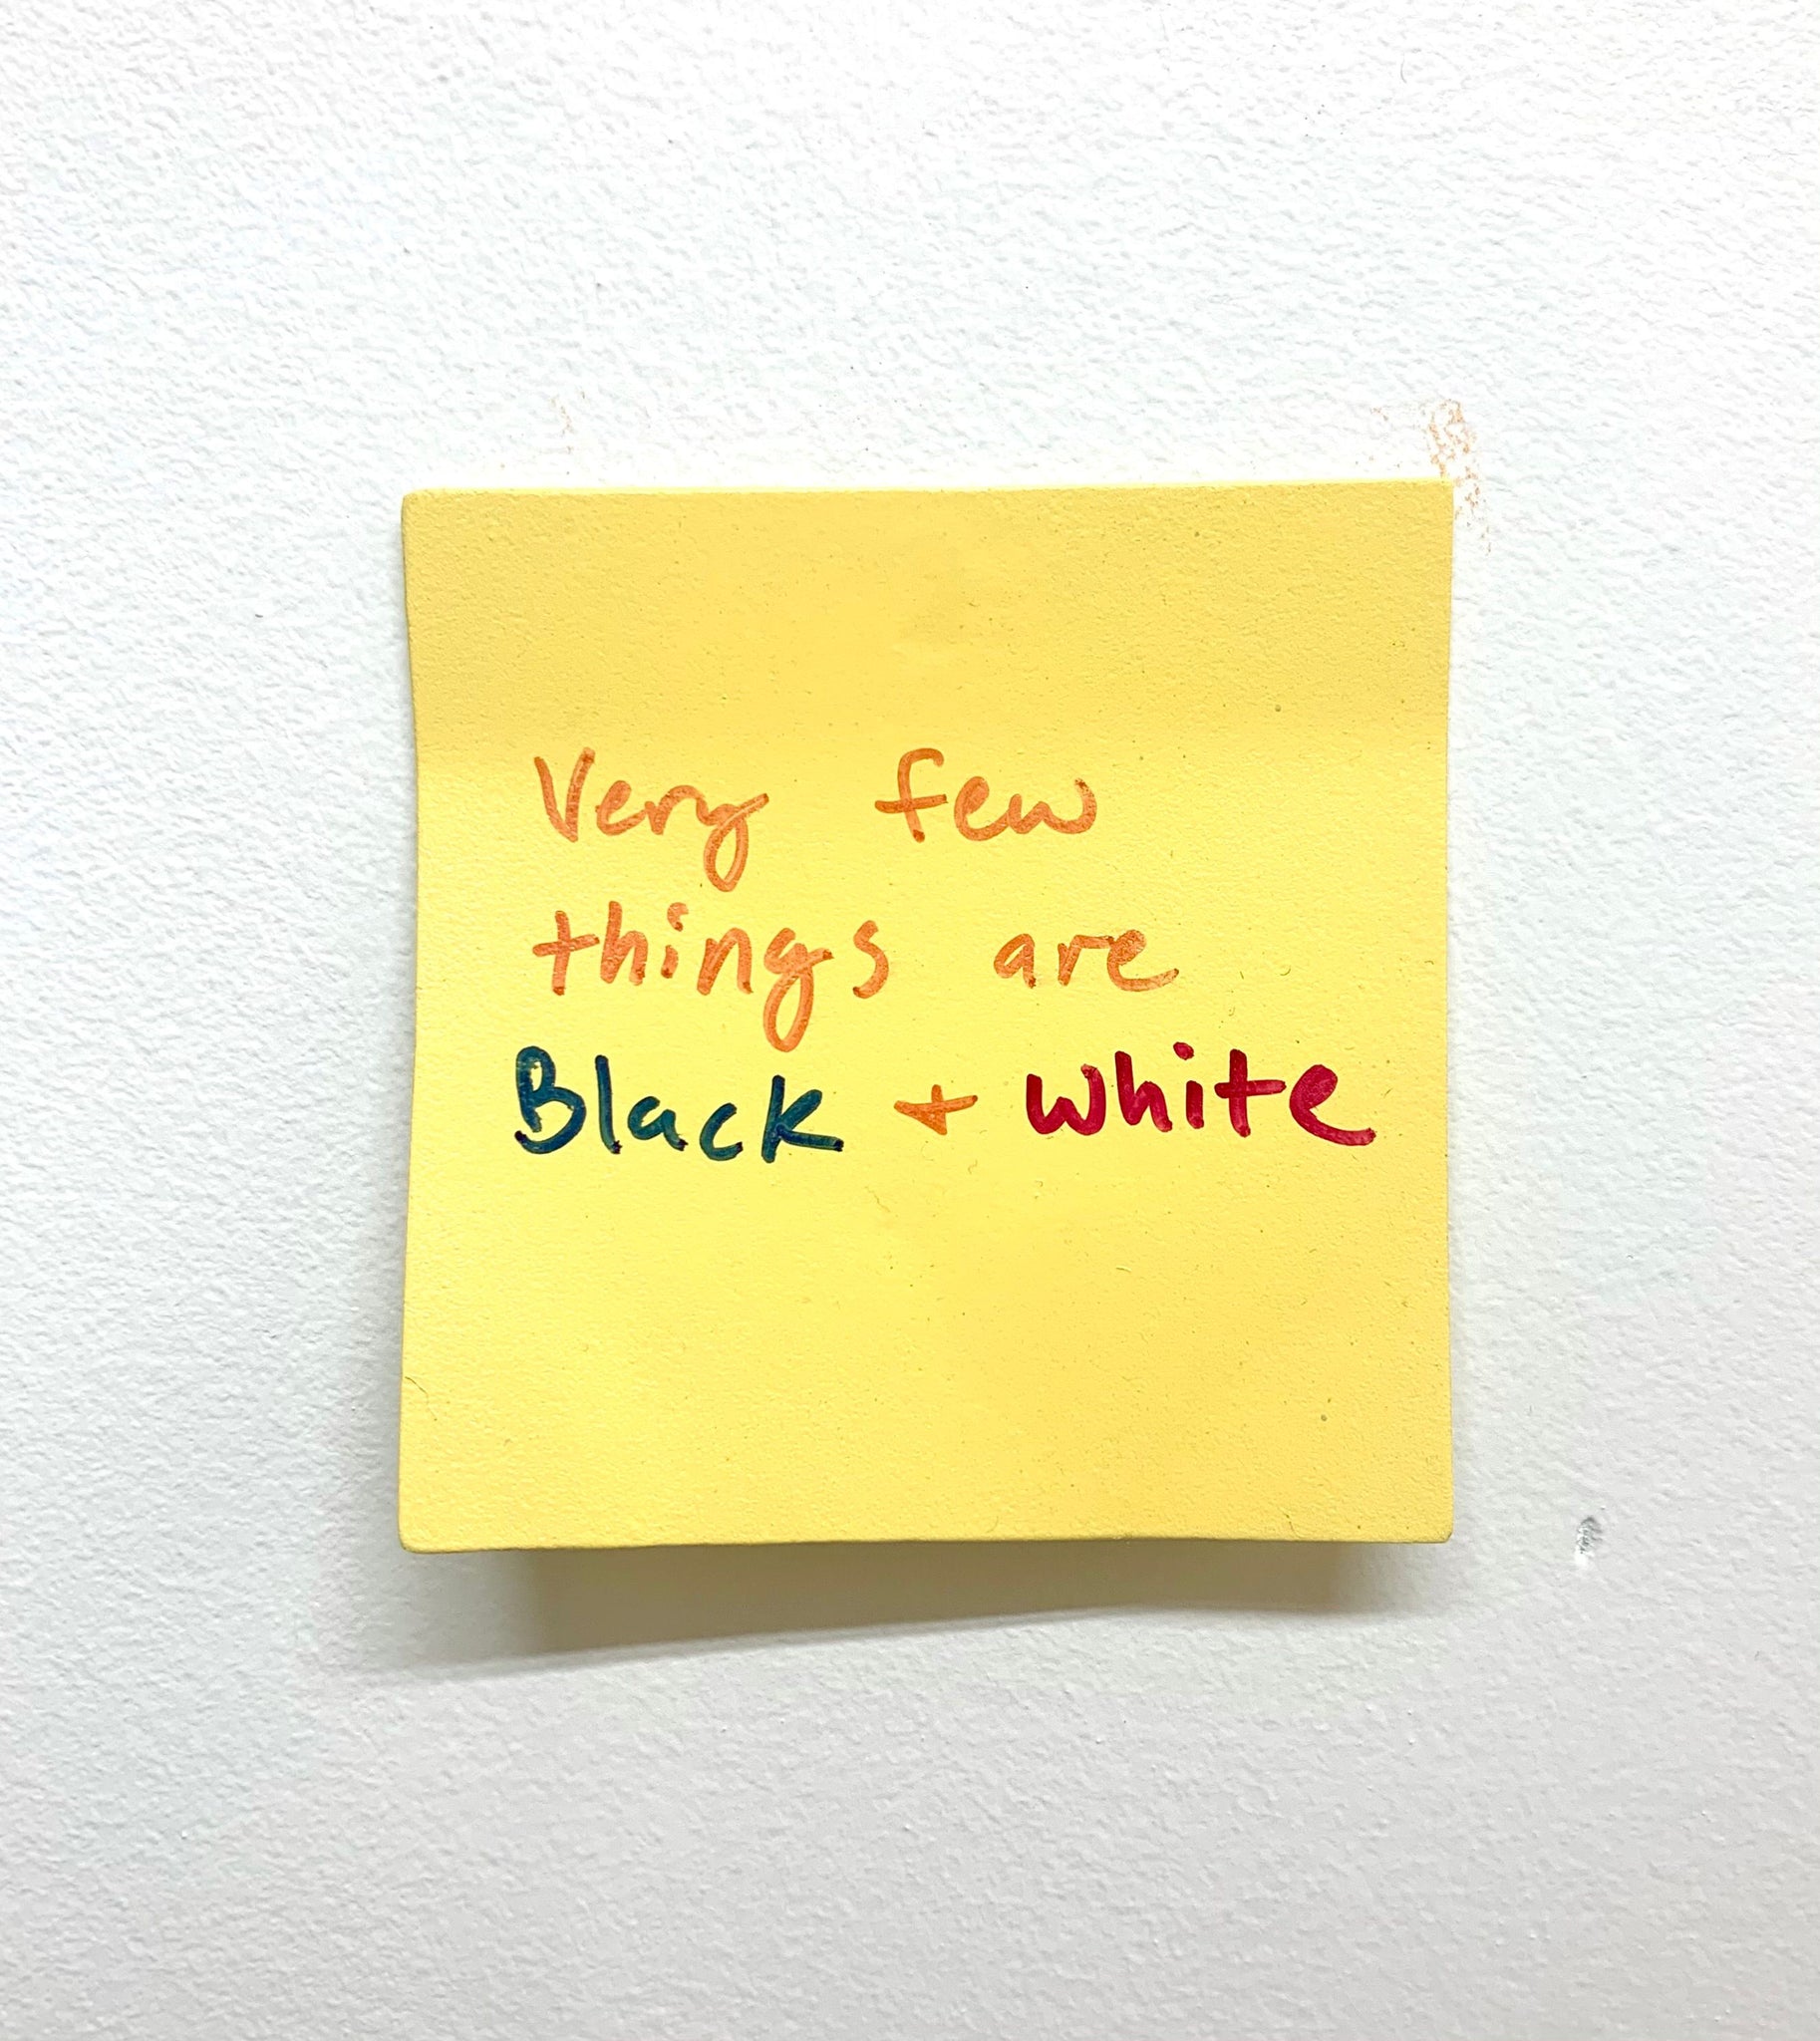 Stuart Lantry, "Very few things are Black+White"